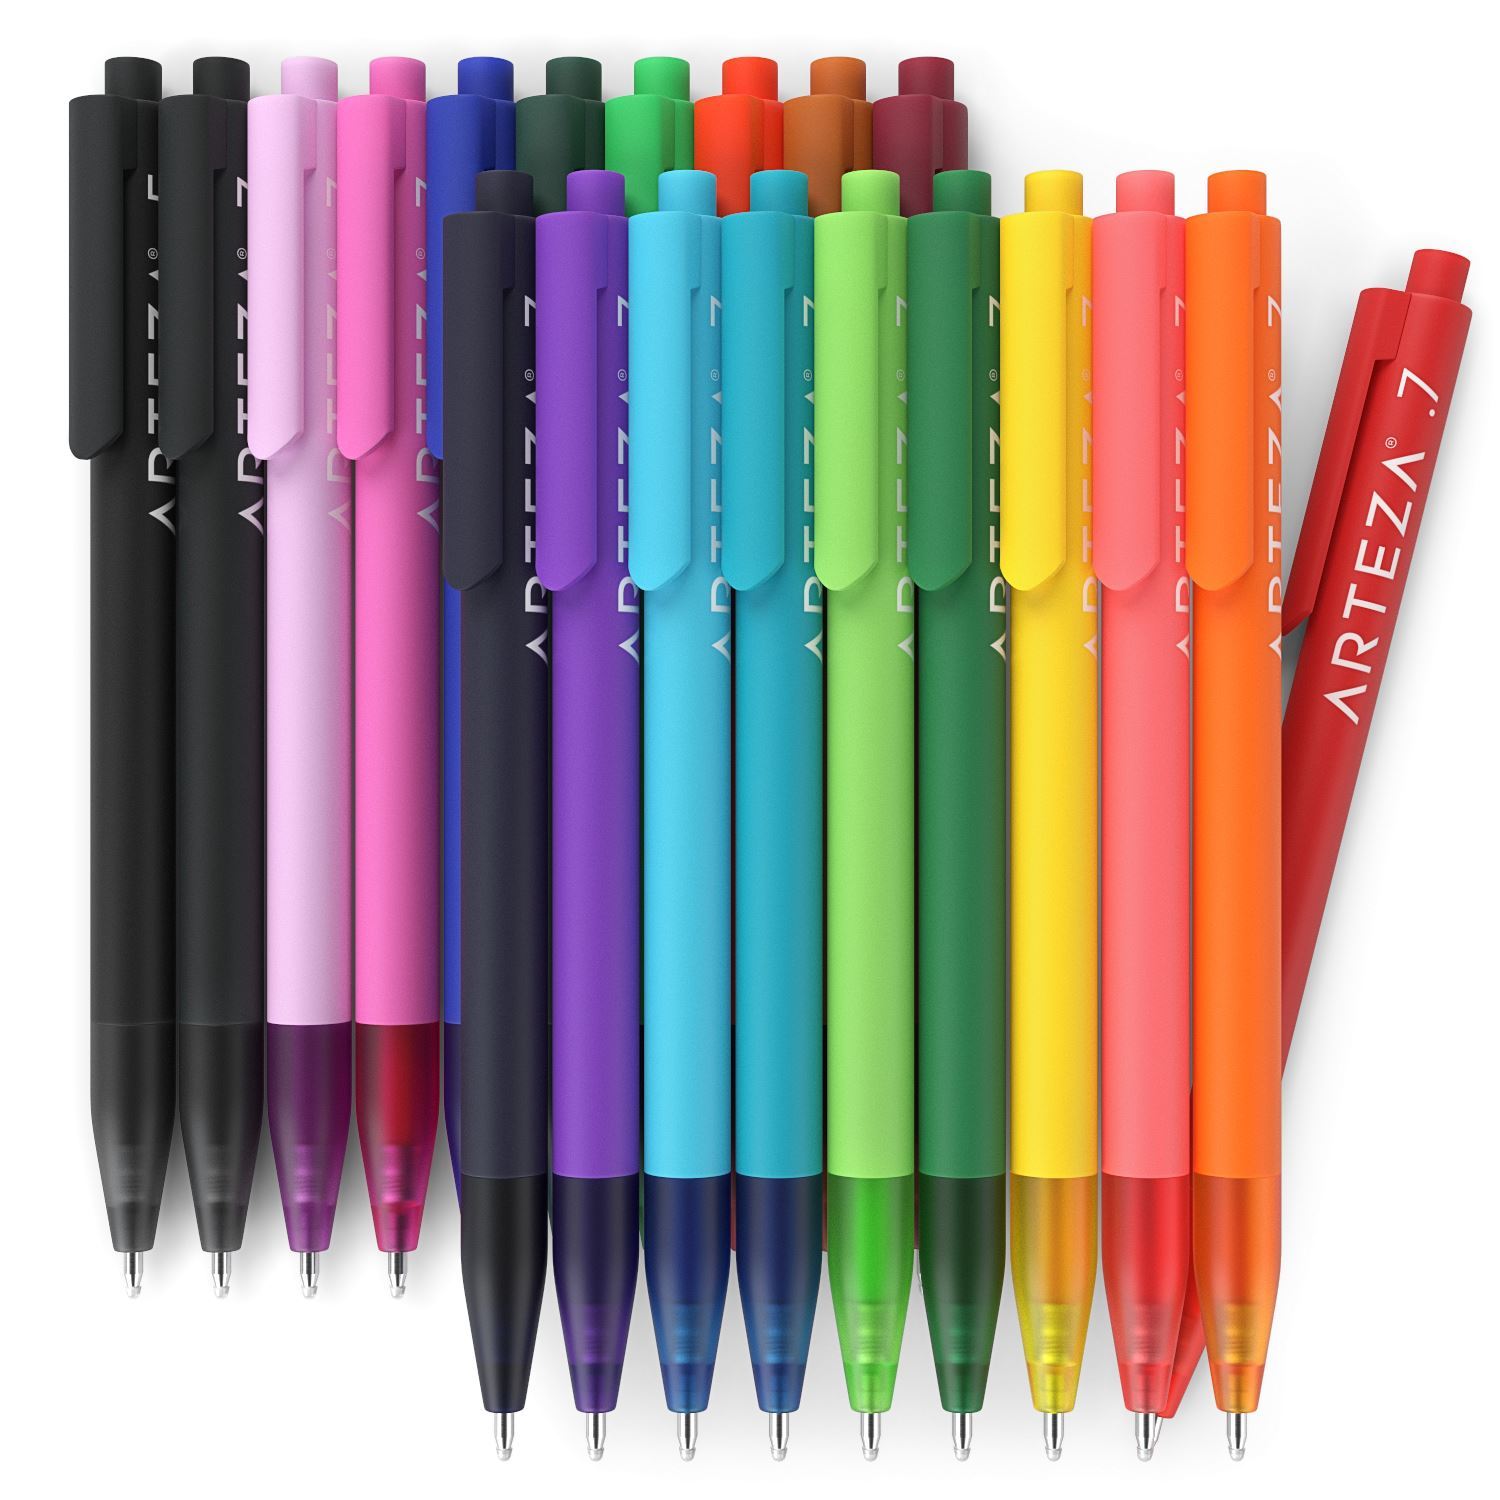 Arteza Gel Ink Colored Pens Set, Assorted Colors - Doodle, Draw